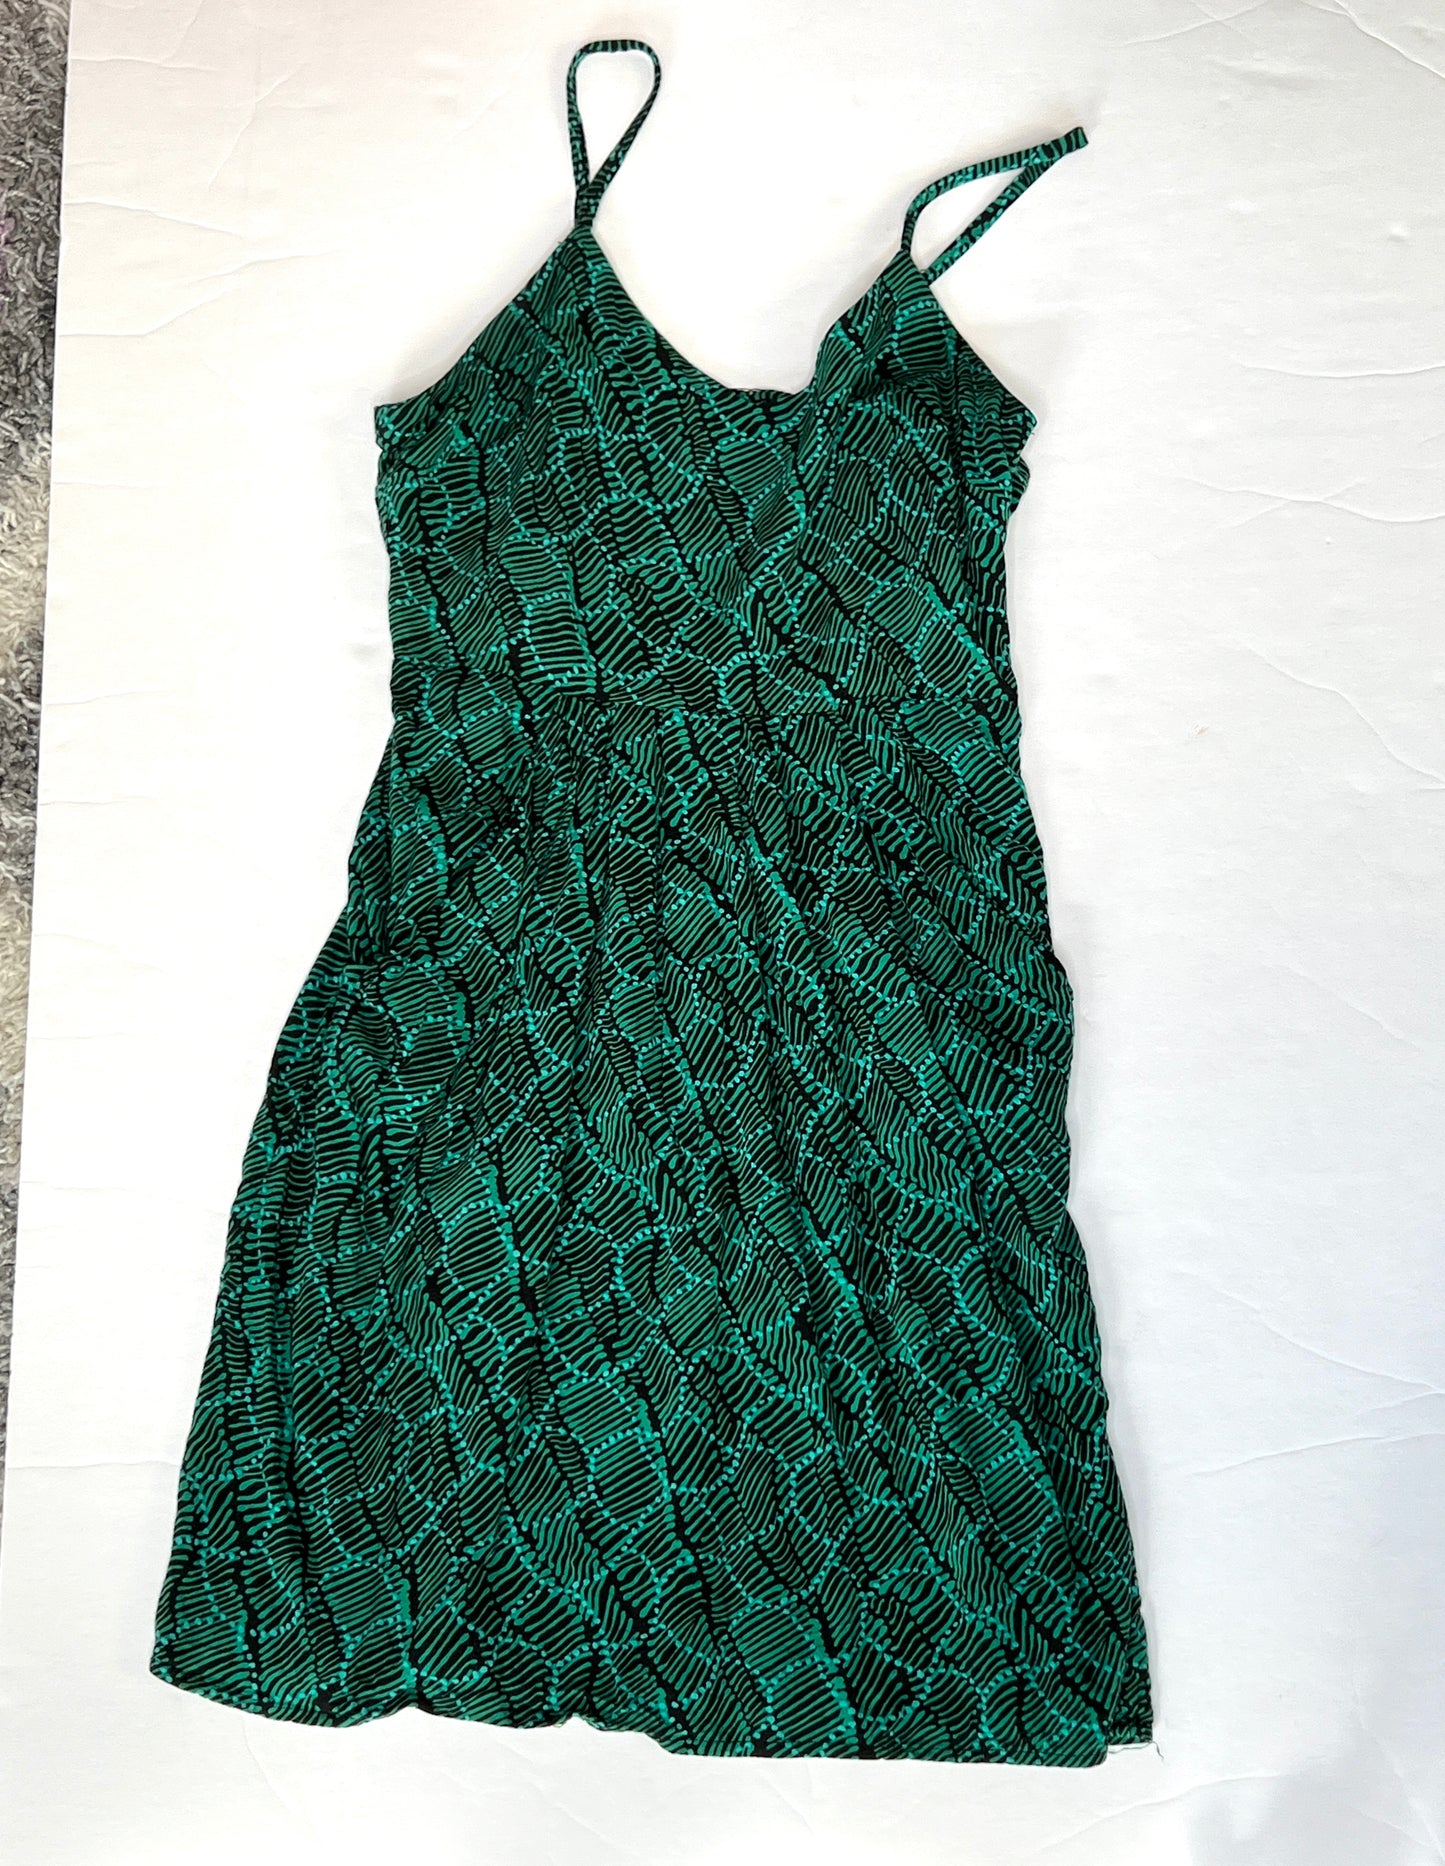 Women's Size 6 Mossimo Green Dress